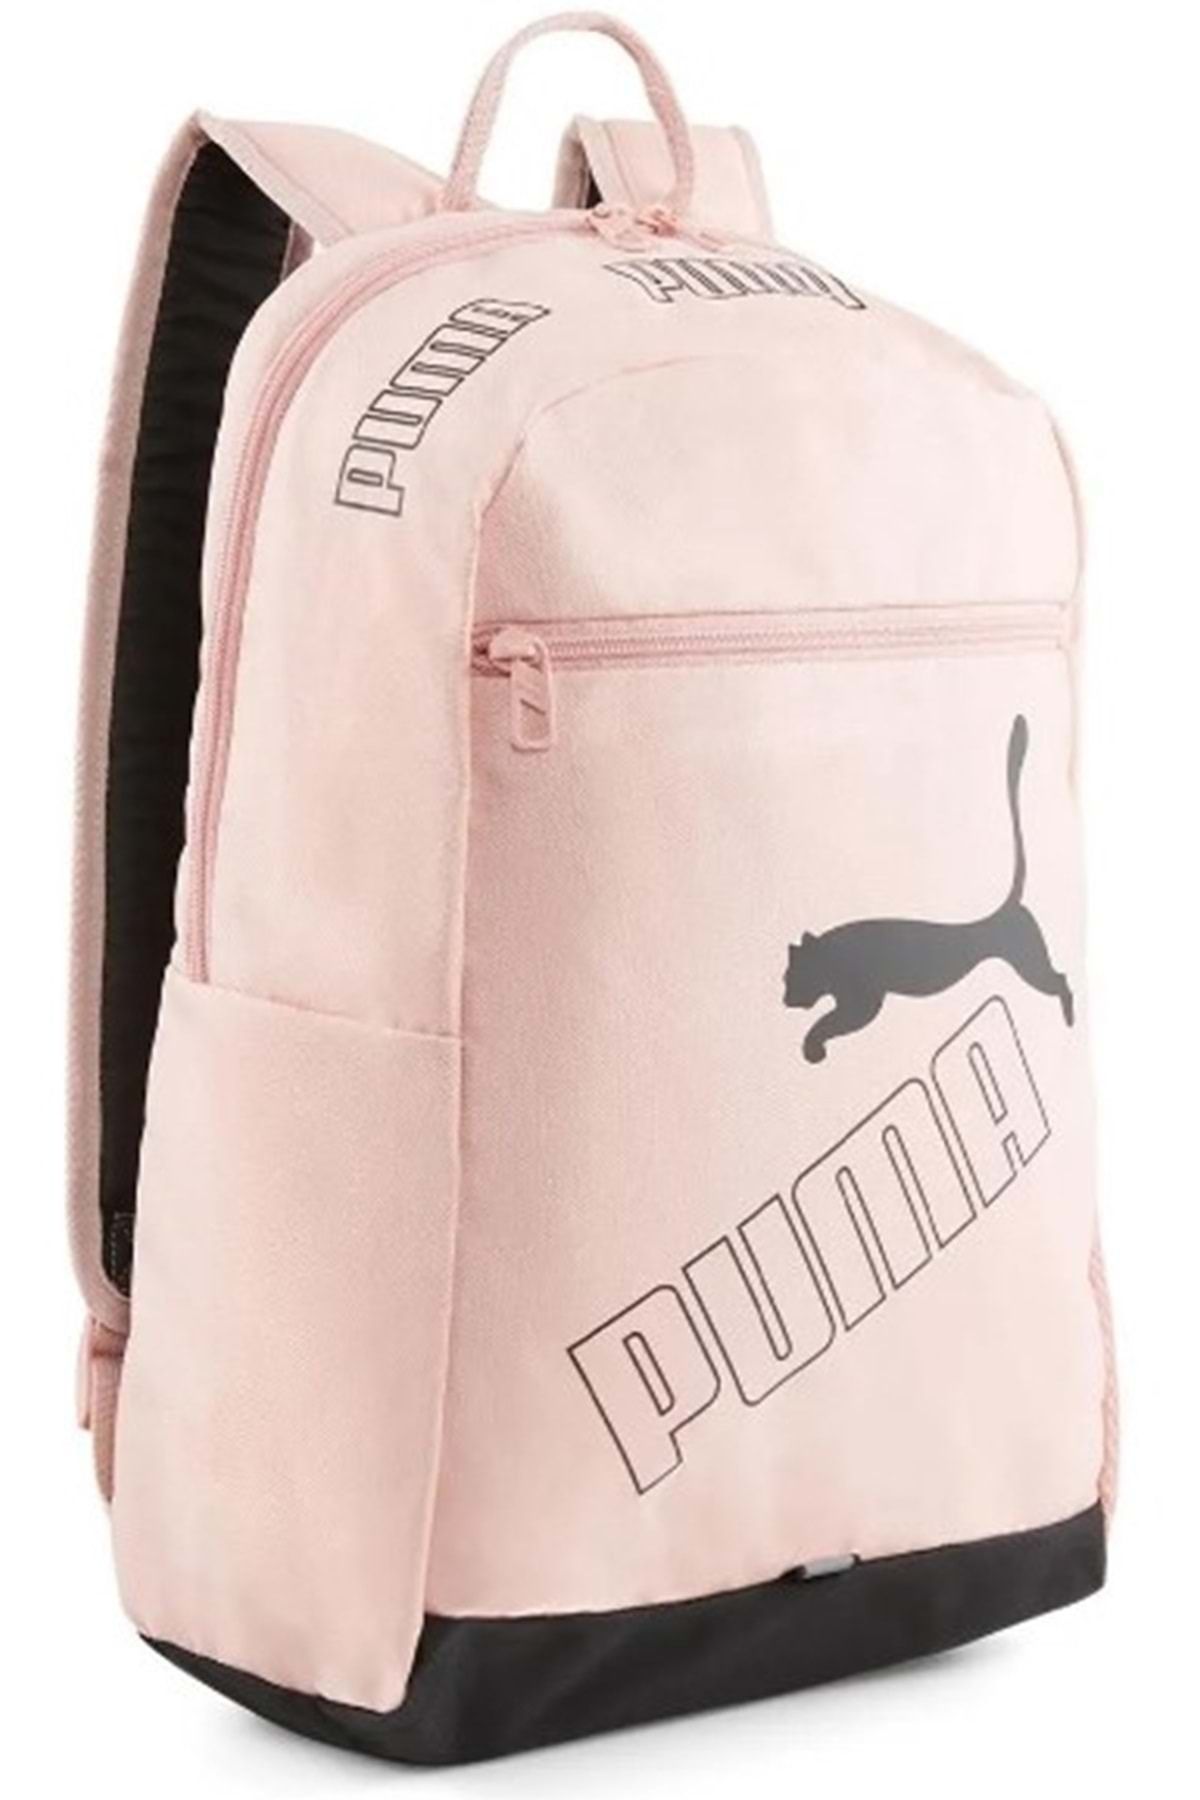 Puma Phase Backpack Iı 0772295-01 Unisex Sırt Çantası Pembe-siyah